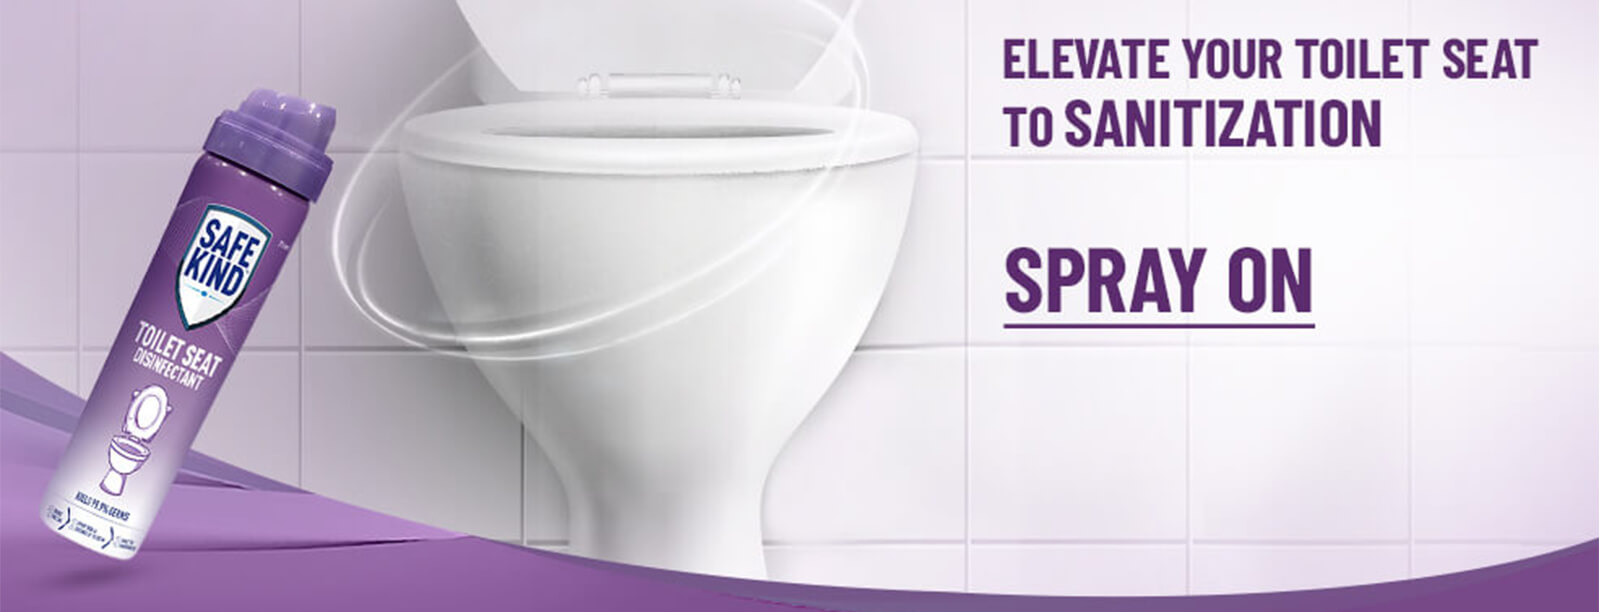 Features of Safekind Toilet Spray